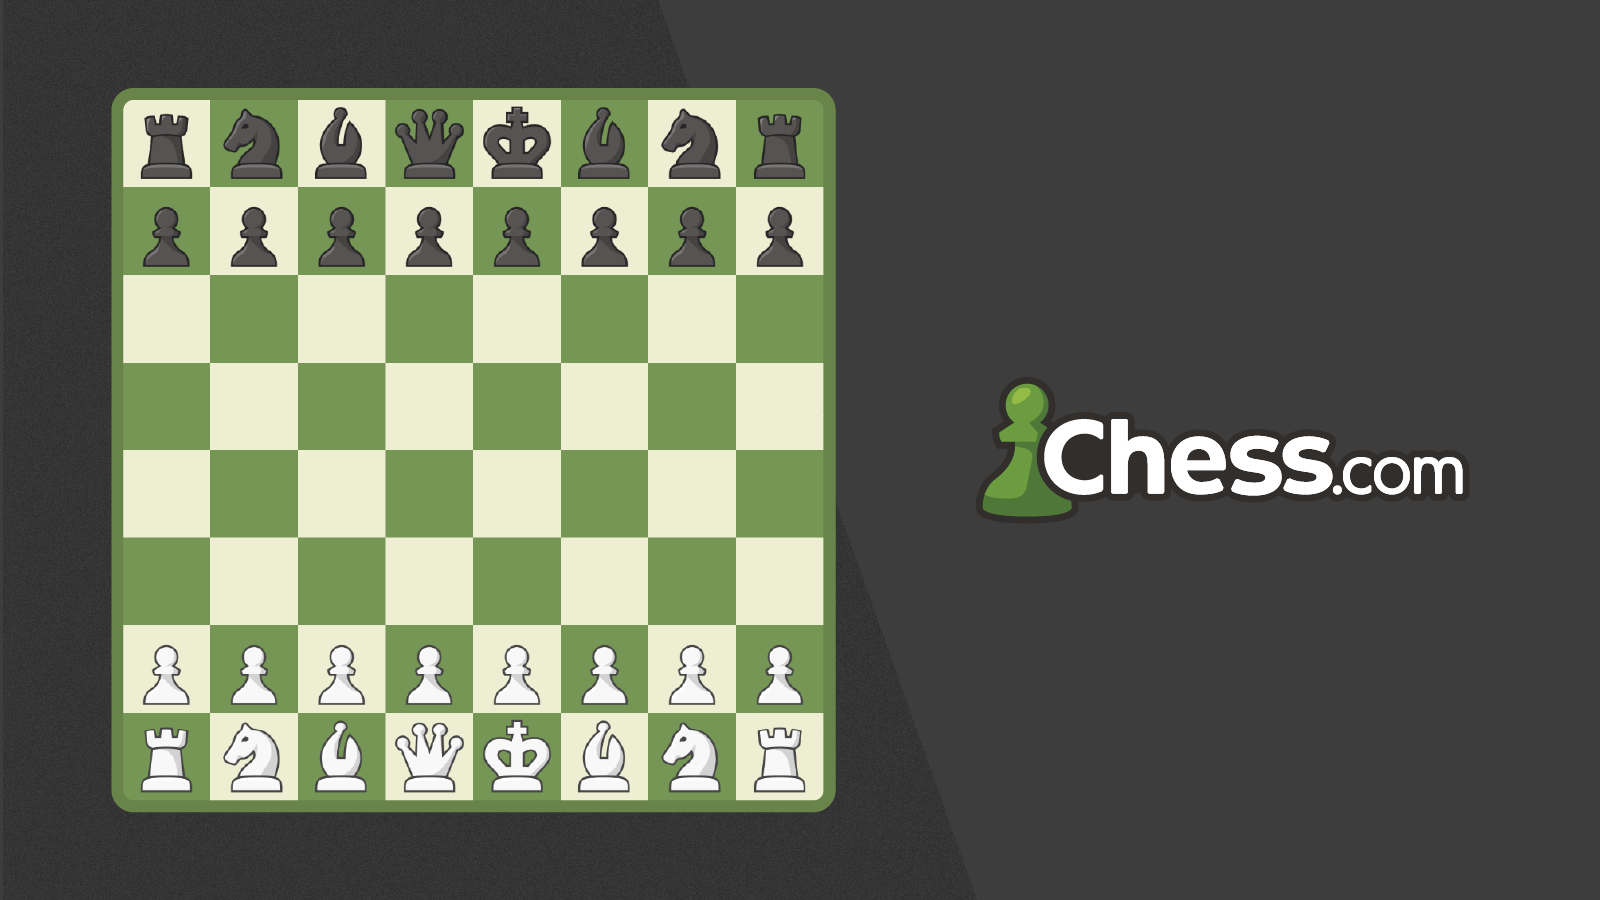 Ajedrez en Vivo - Chess.com  Chess game, Chess, Chess online